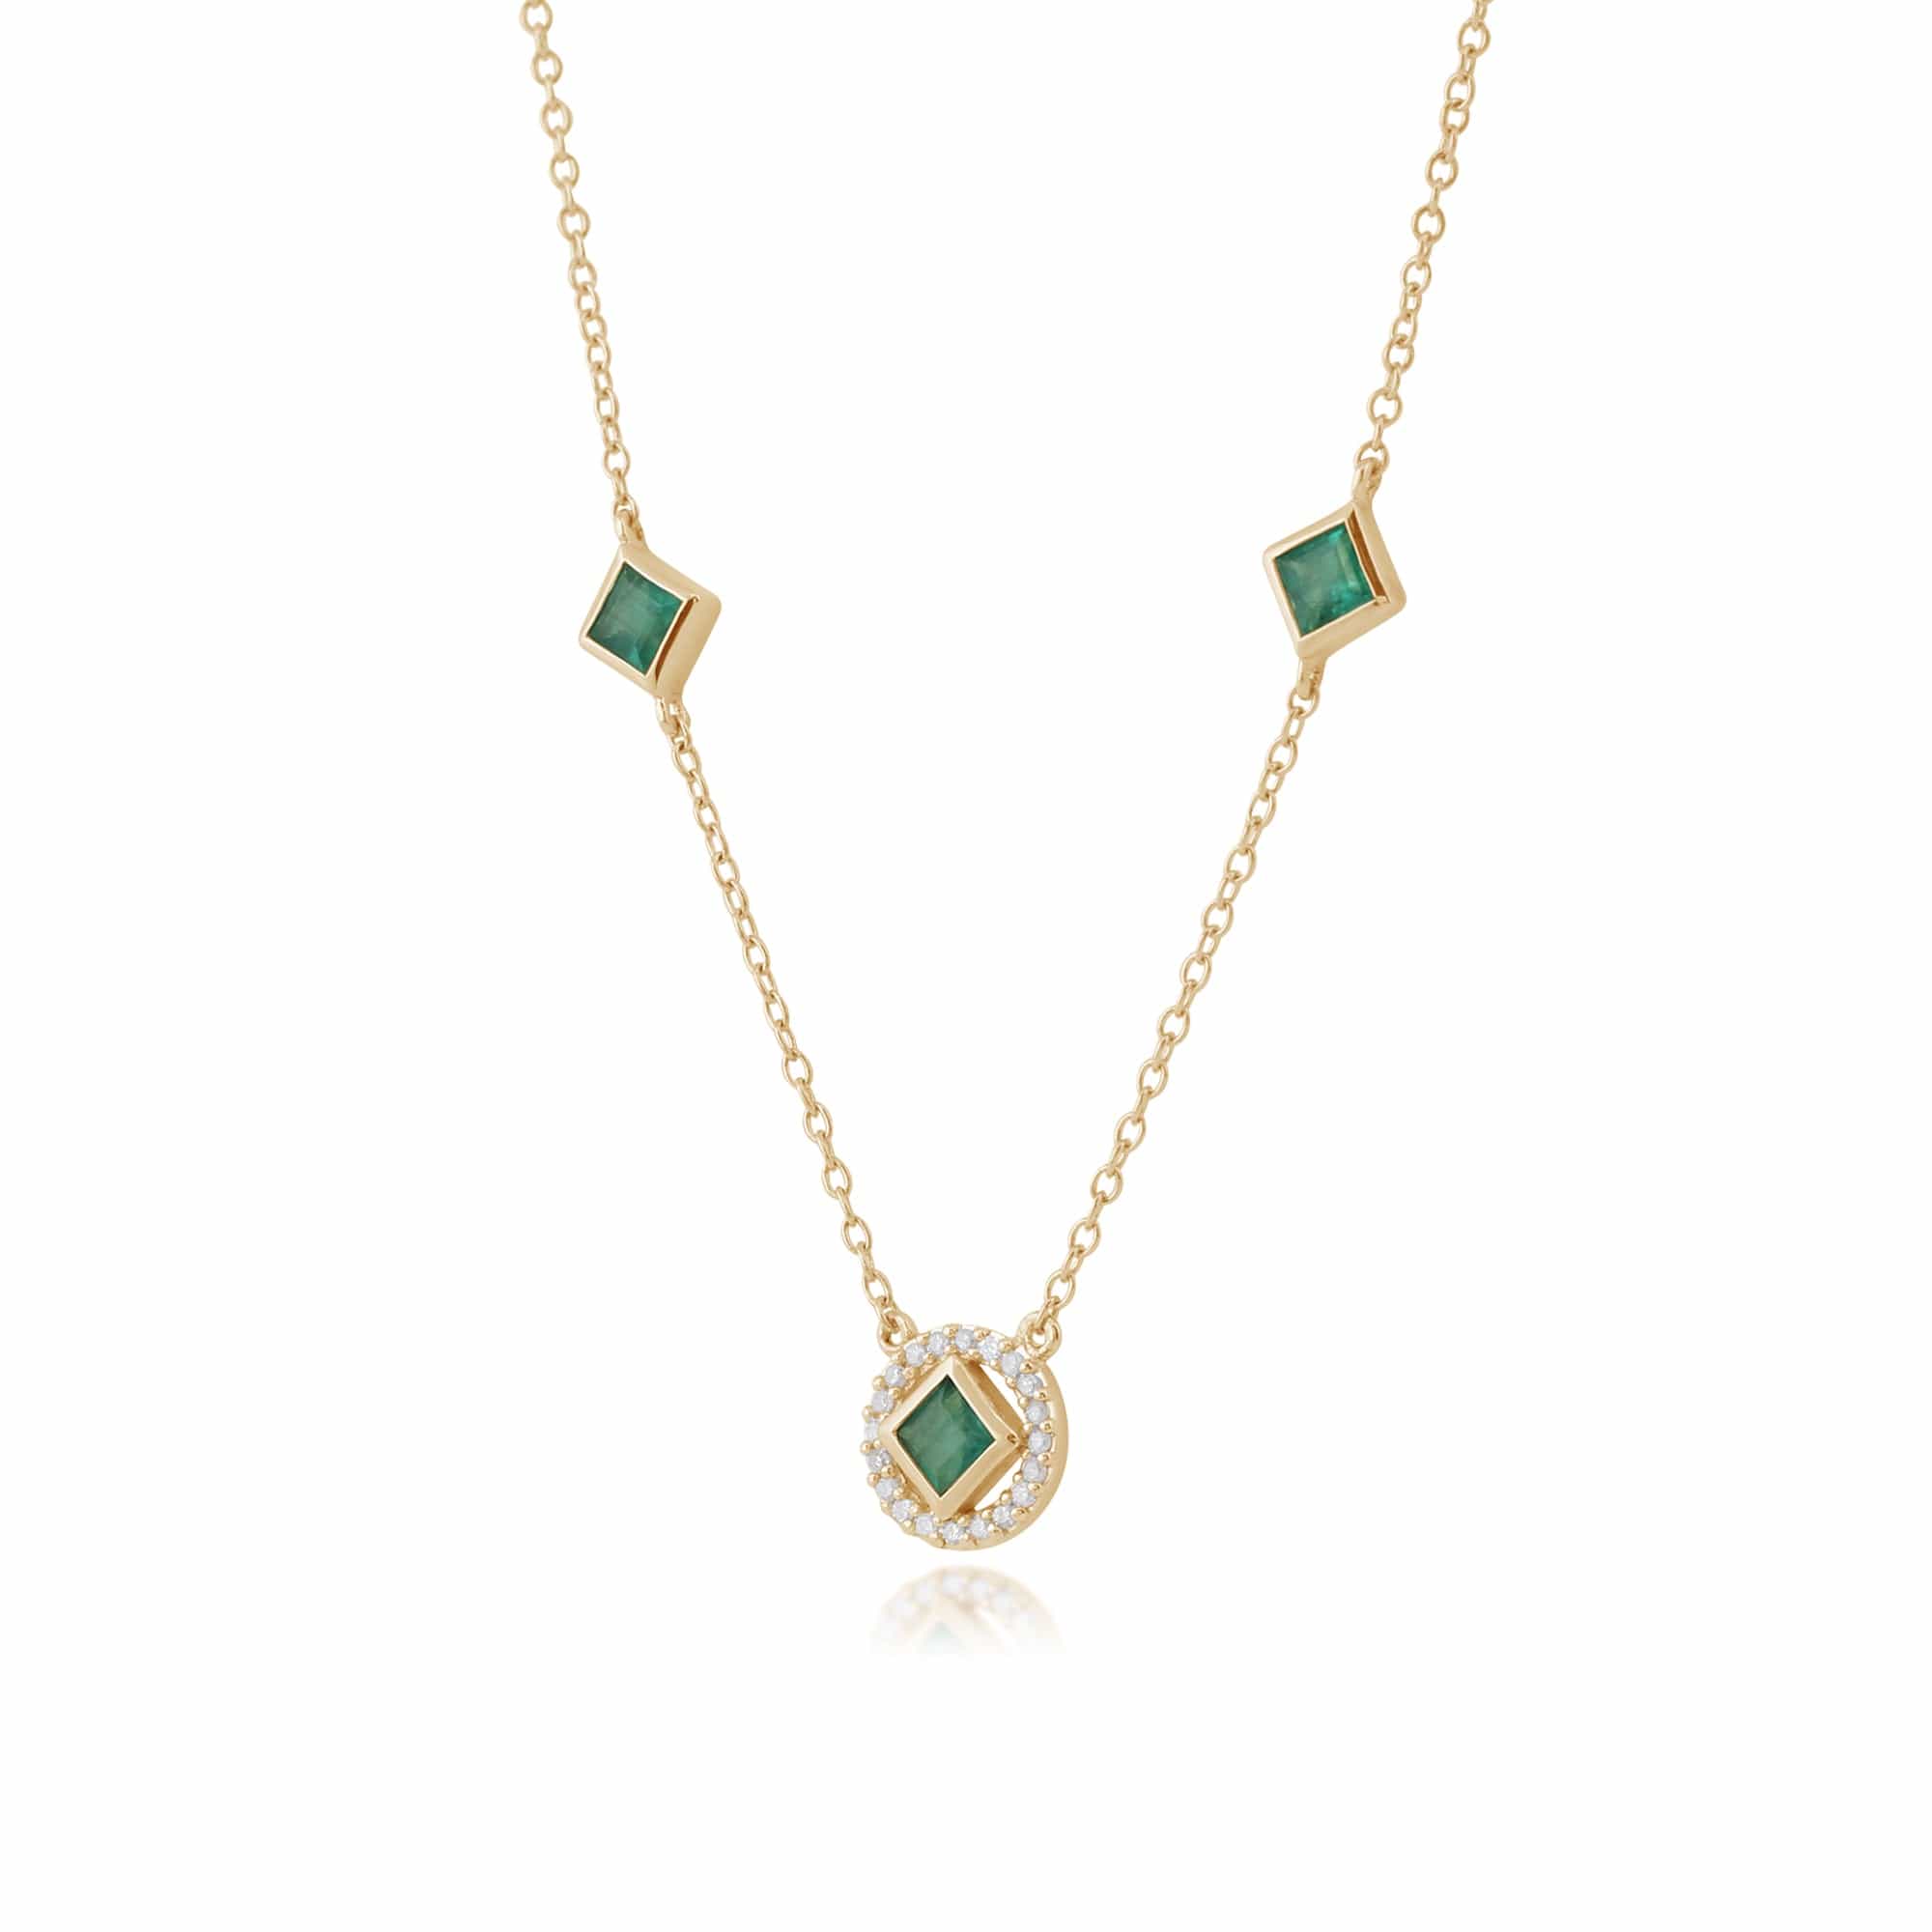 135E1227039-135N0278039 Geometric Square Emerald & Diamond Drop Earrings & Necklace Set in 9ct Yellow Gold 3